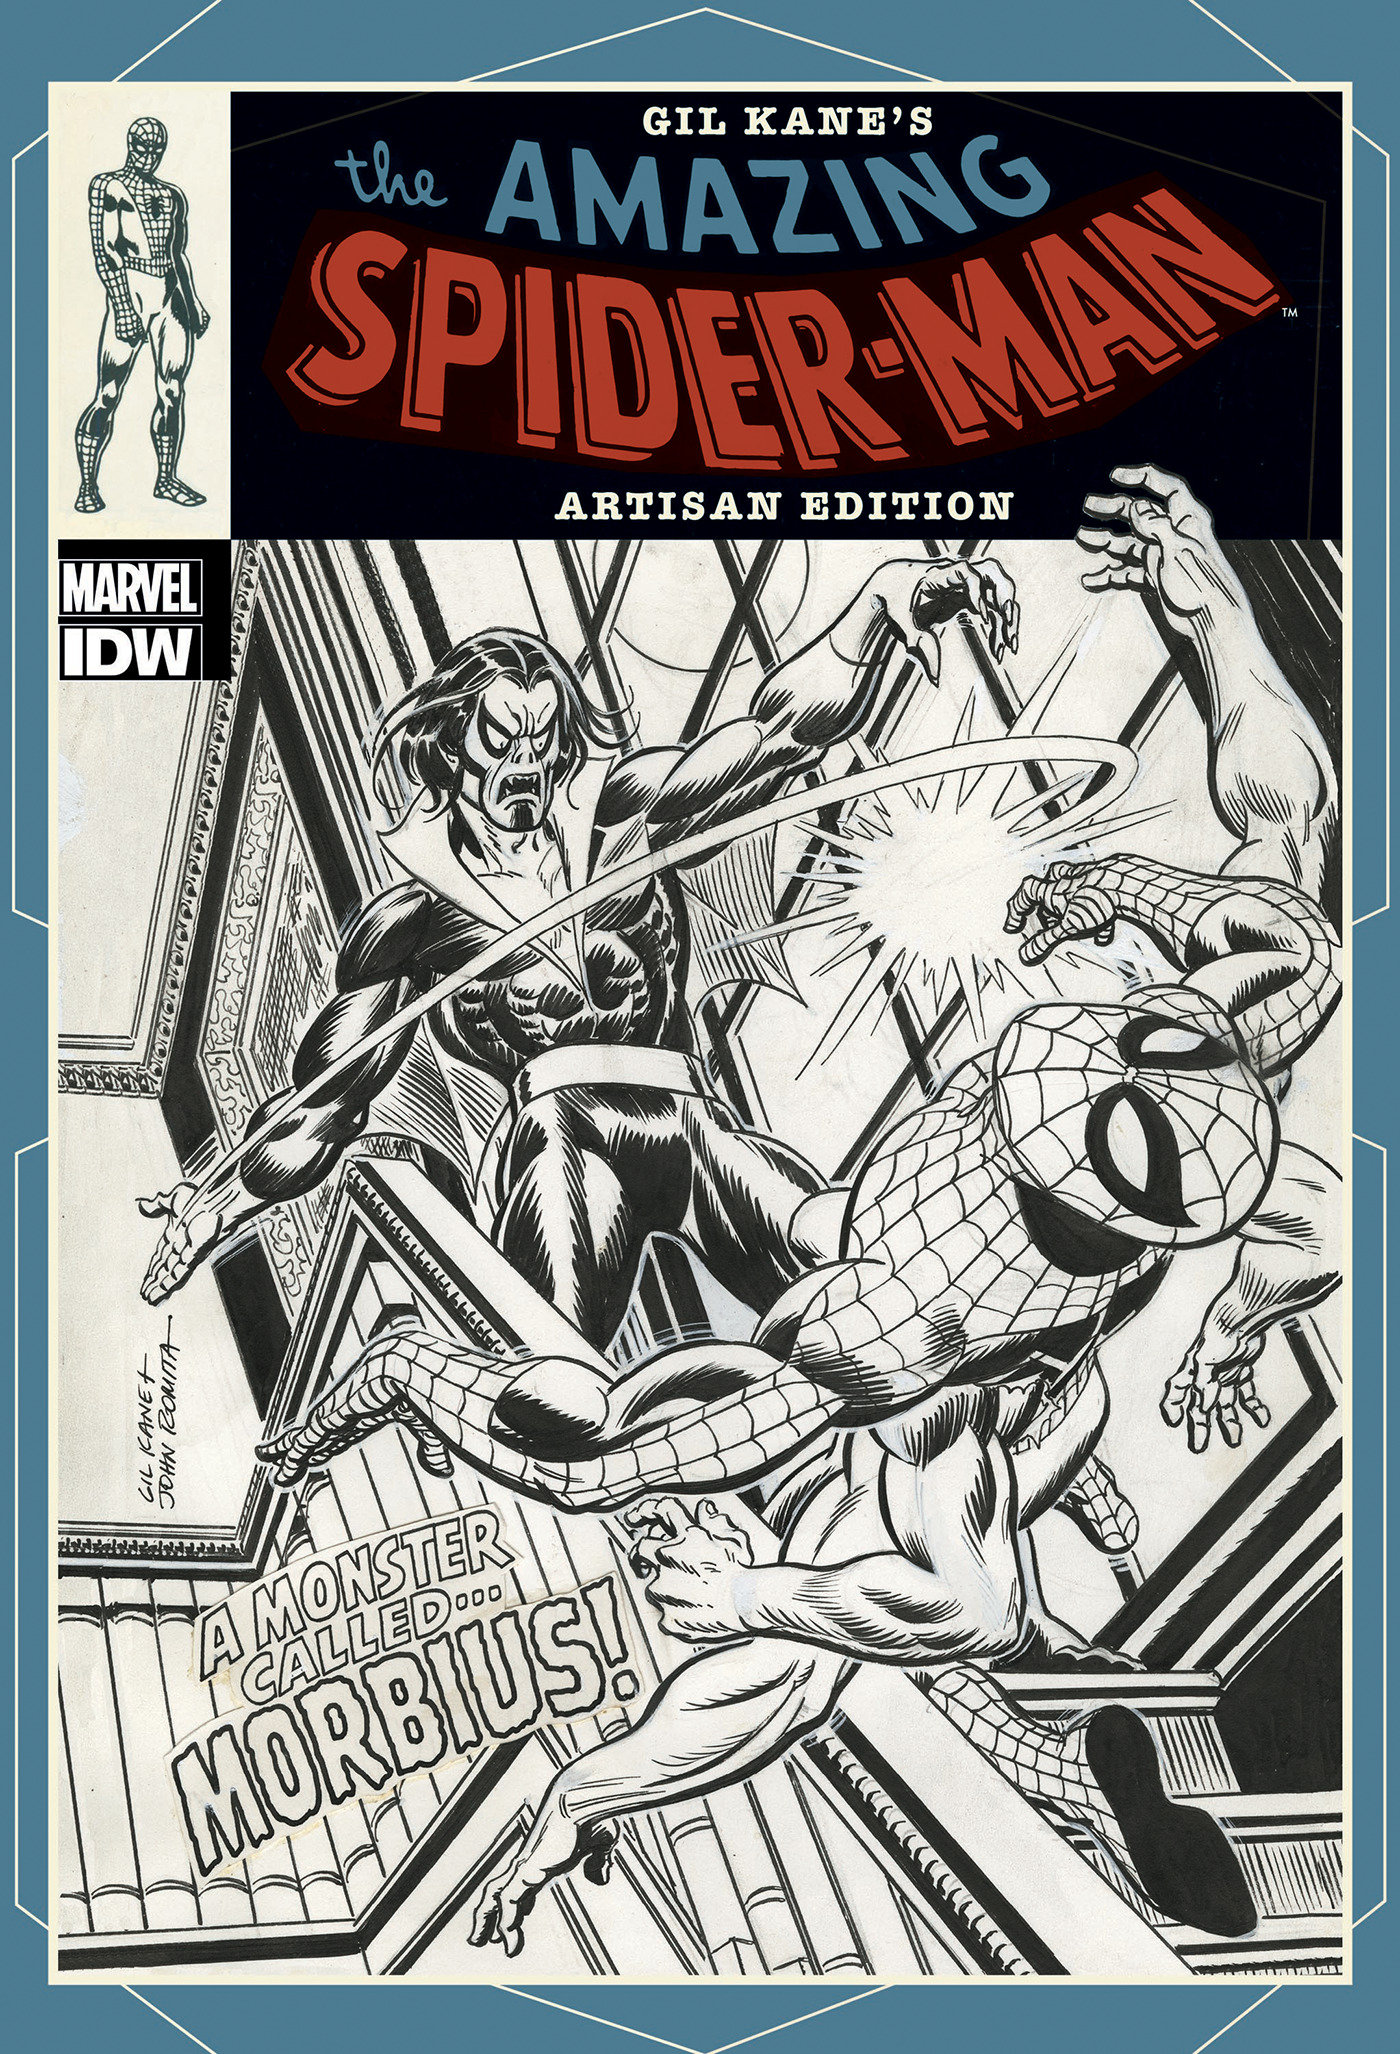 Gil Kane’s Amazing Spider-Man Artisan Edition